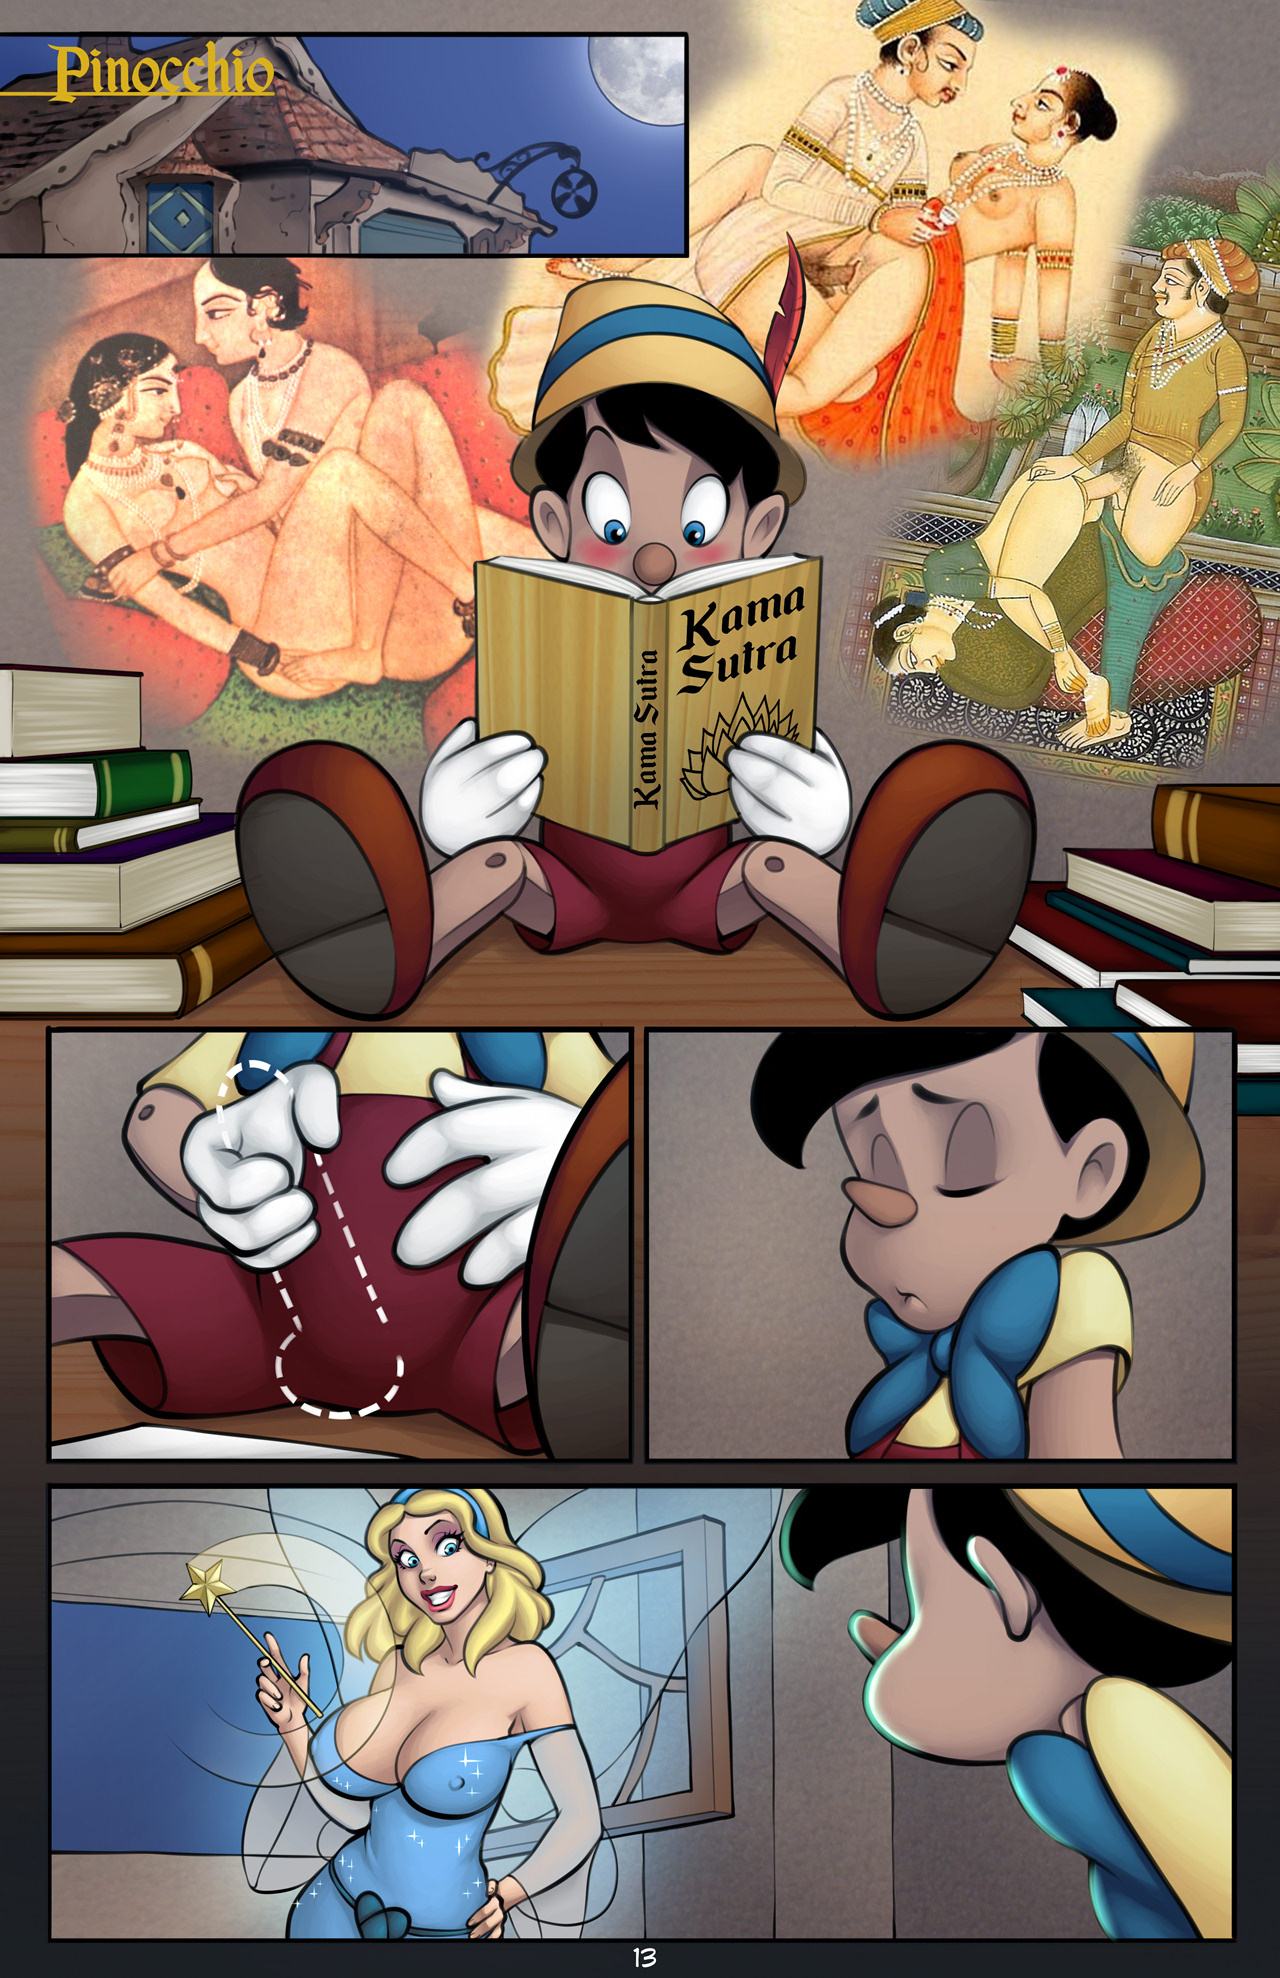 Disney sex comic